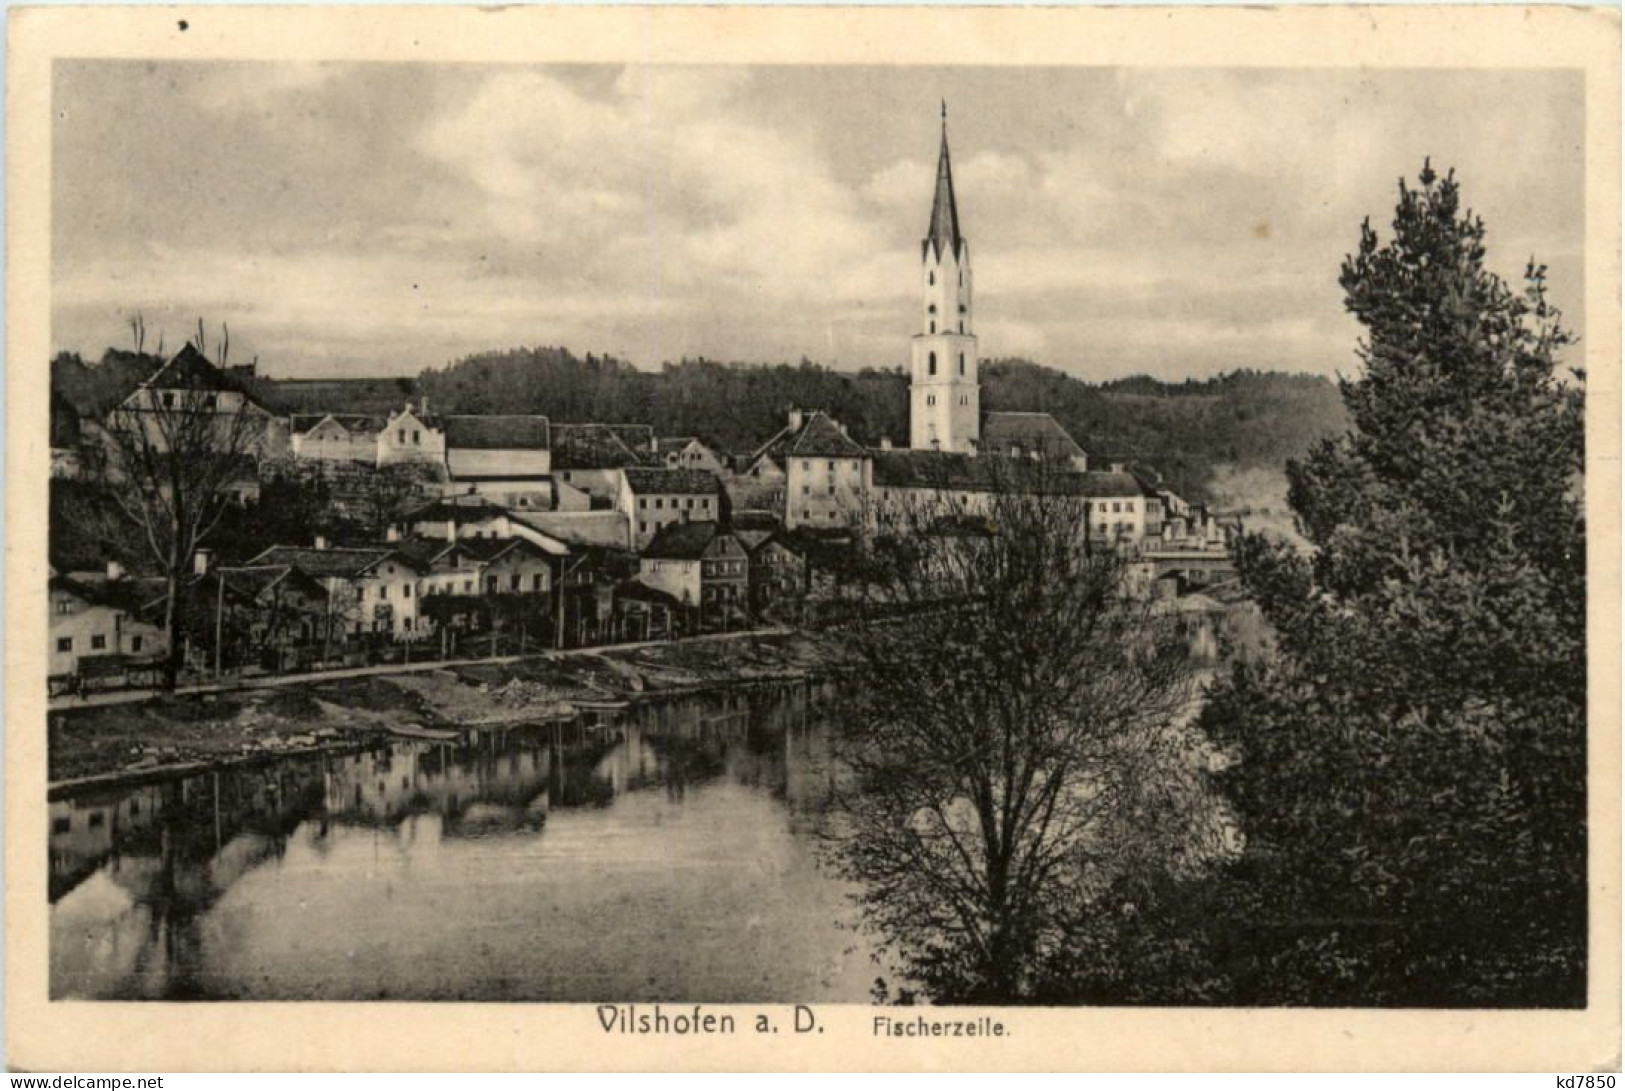 Vilshofen, Fischerzeile - Vilshofen